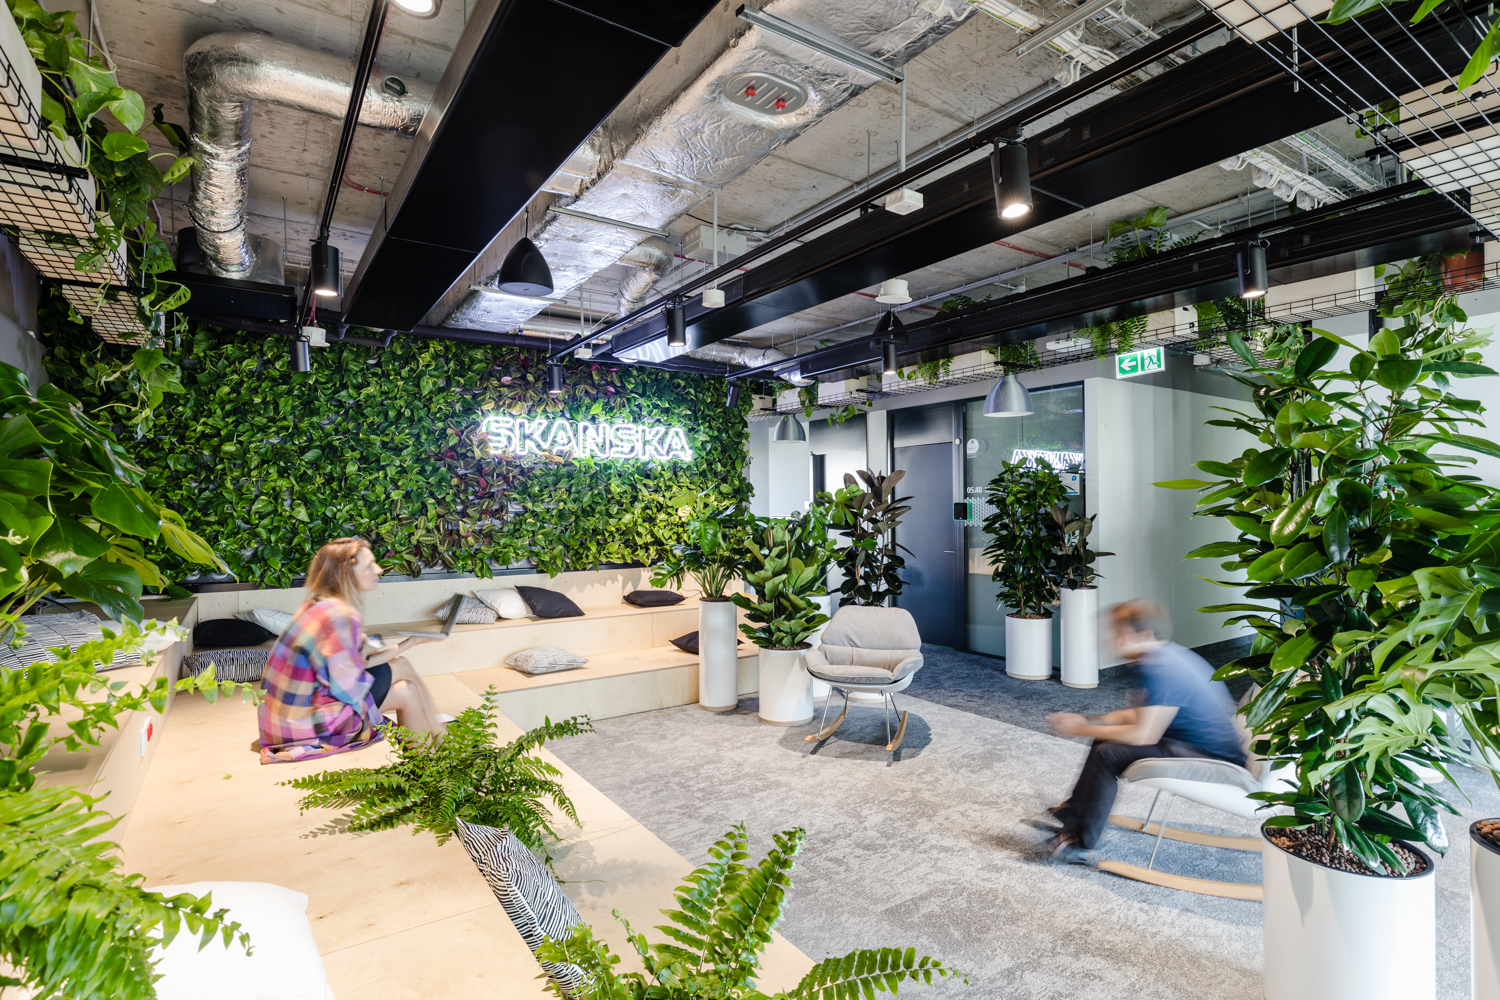 Skanska: Return to office spaces will mark this year